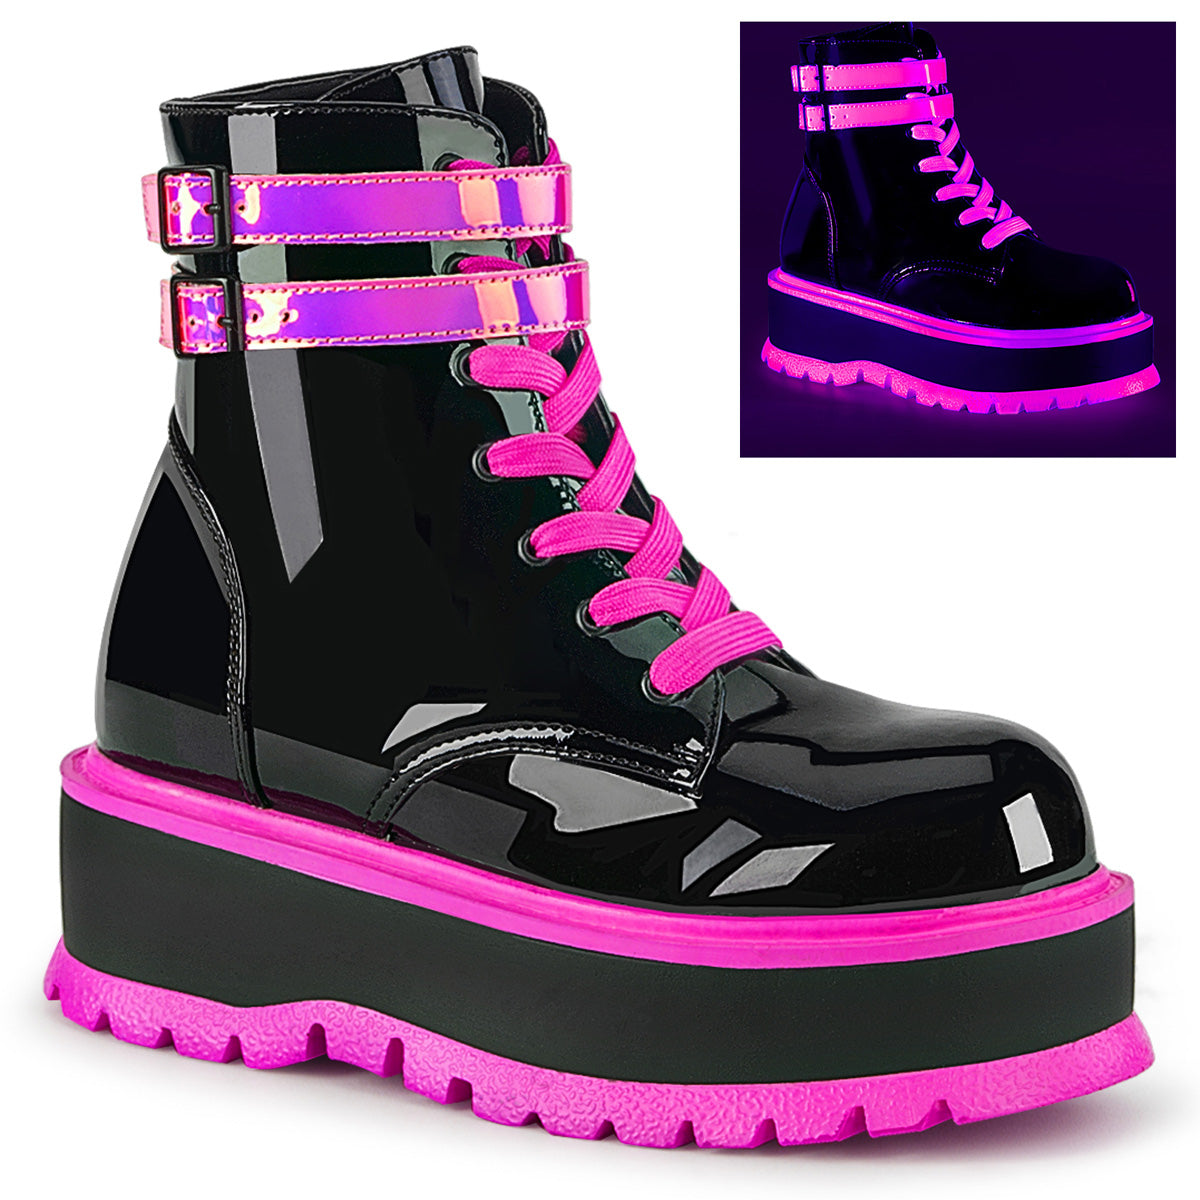 DEMONIA Slacker-52 Ankle Boots - Black UV Iridescent Pink